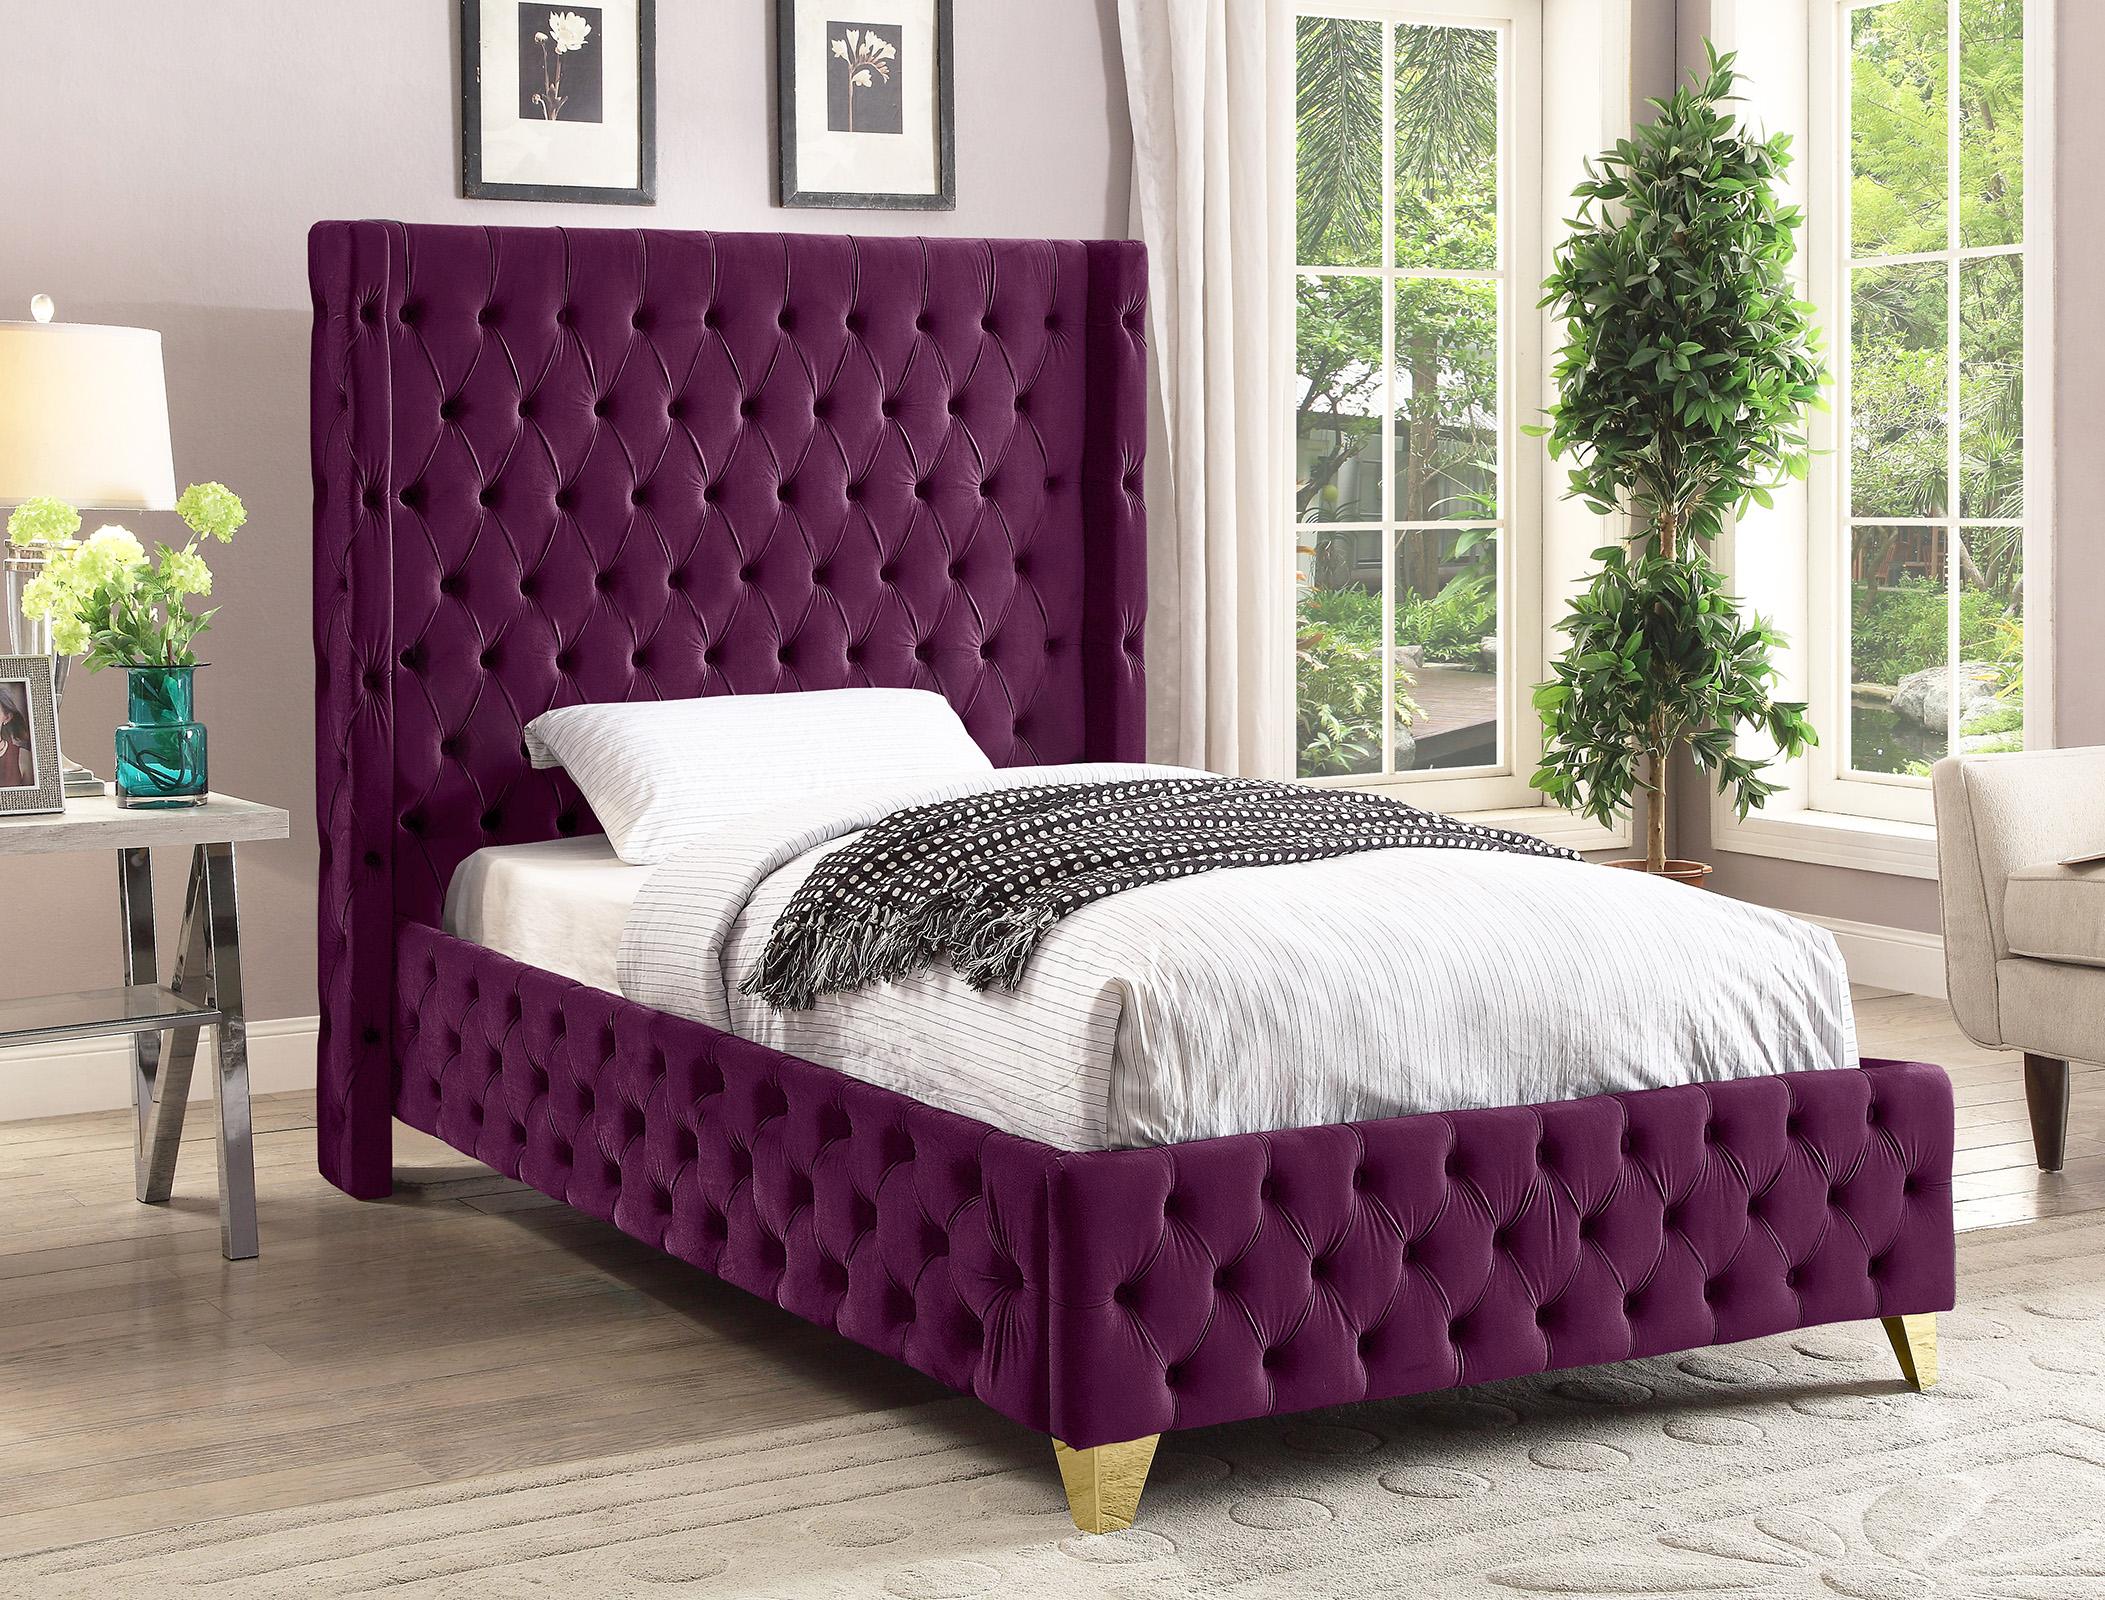 

    
Meridian Furniture SAVAN SavanPurple-T Platform Bed Chrome/Purple/Gold SavanPurple-T
